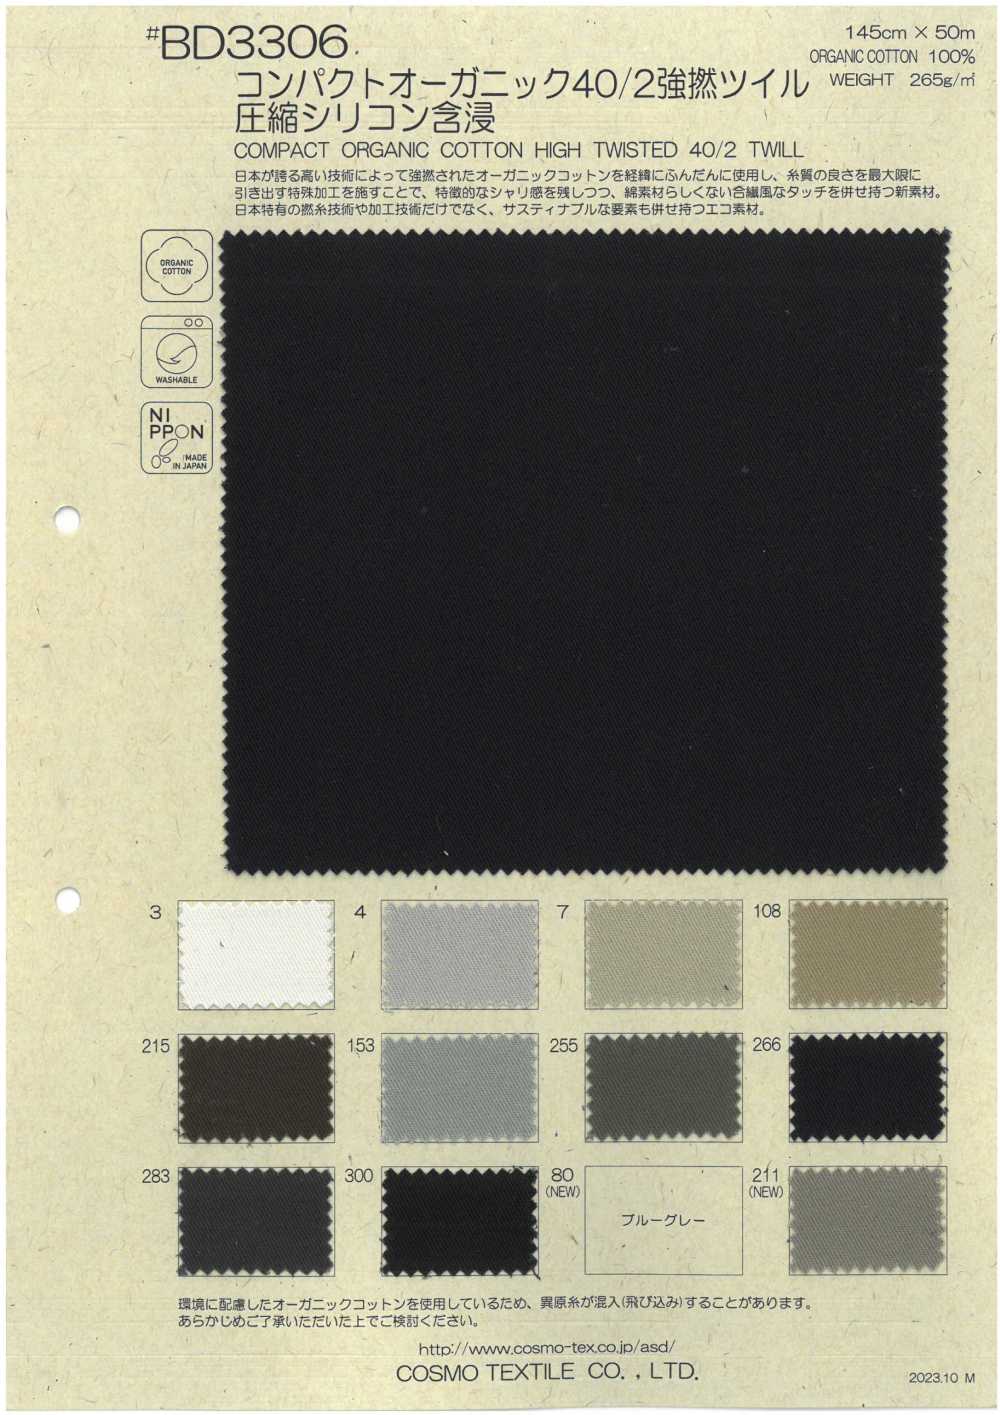 BD3306 紧凑型有机棉 40/2 高捻斜纹压缩硅胶含浸加工[面料] Cosmo Textile 日本